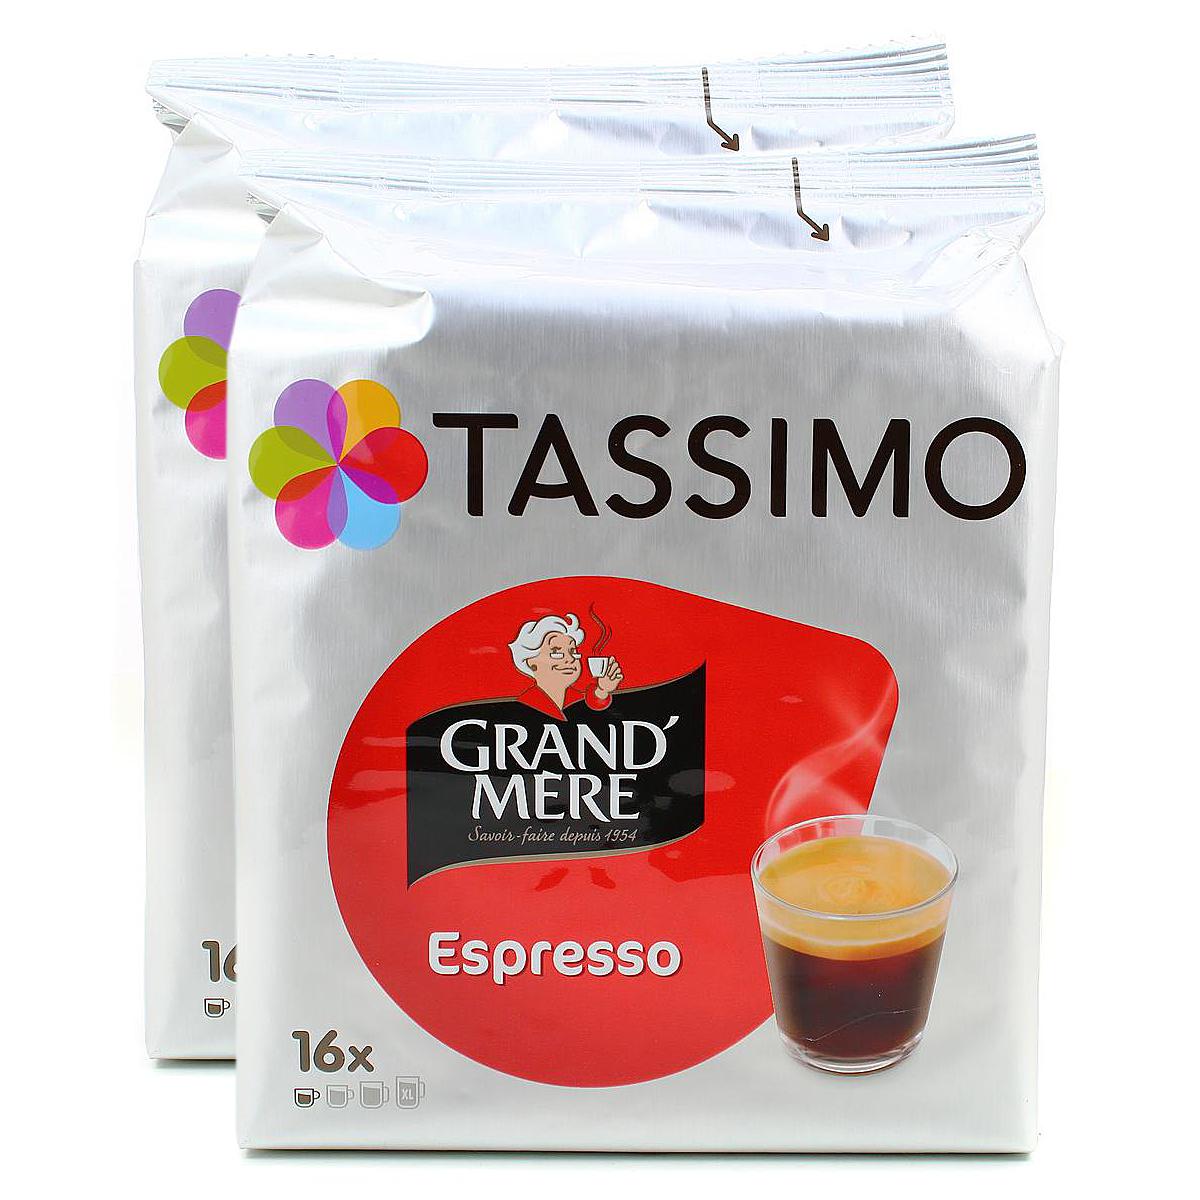 Acheter Promotion Tassimo Expresso Grand Mère, Lot de 2x16 dosettes